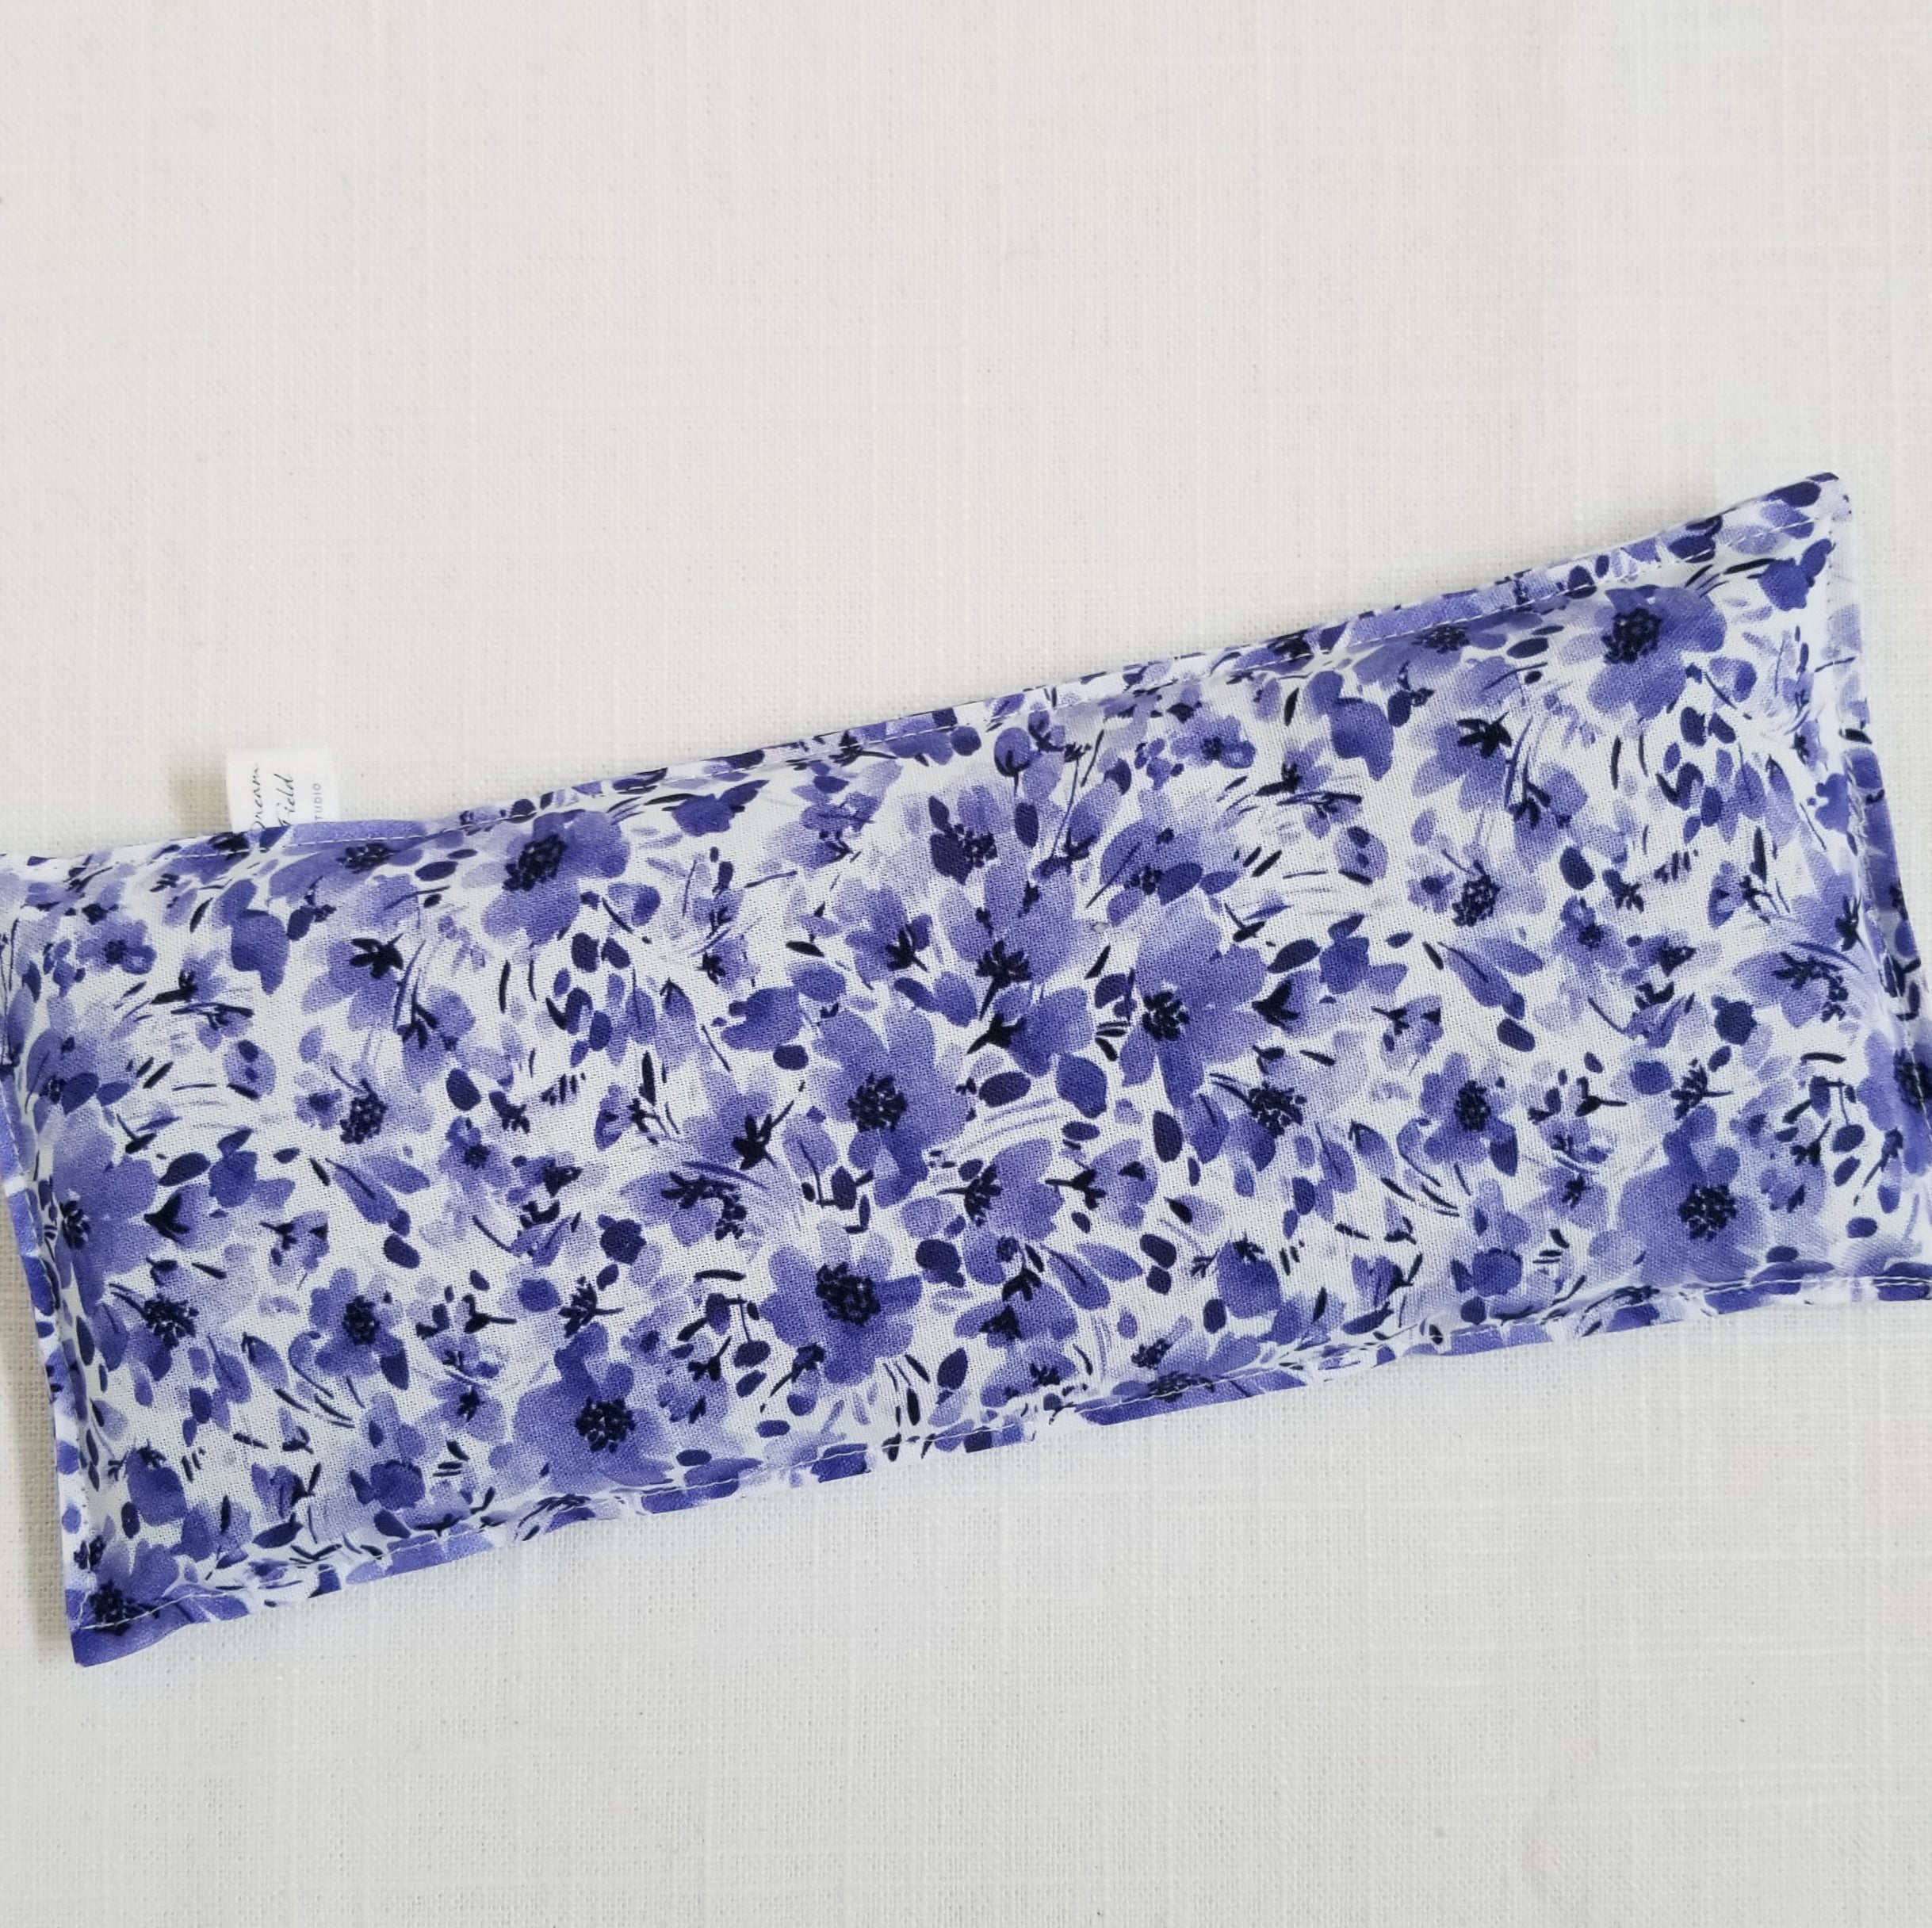 10" x 4" eye pillow violet floral washable cotton print fabric